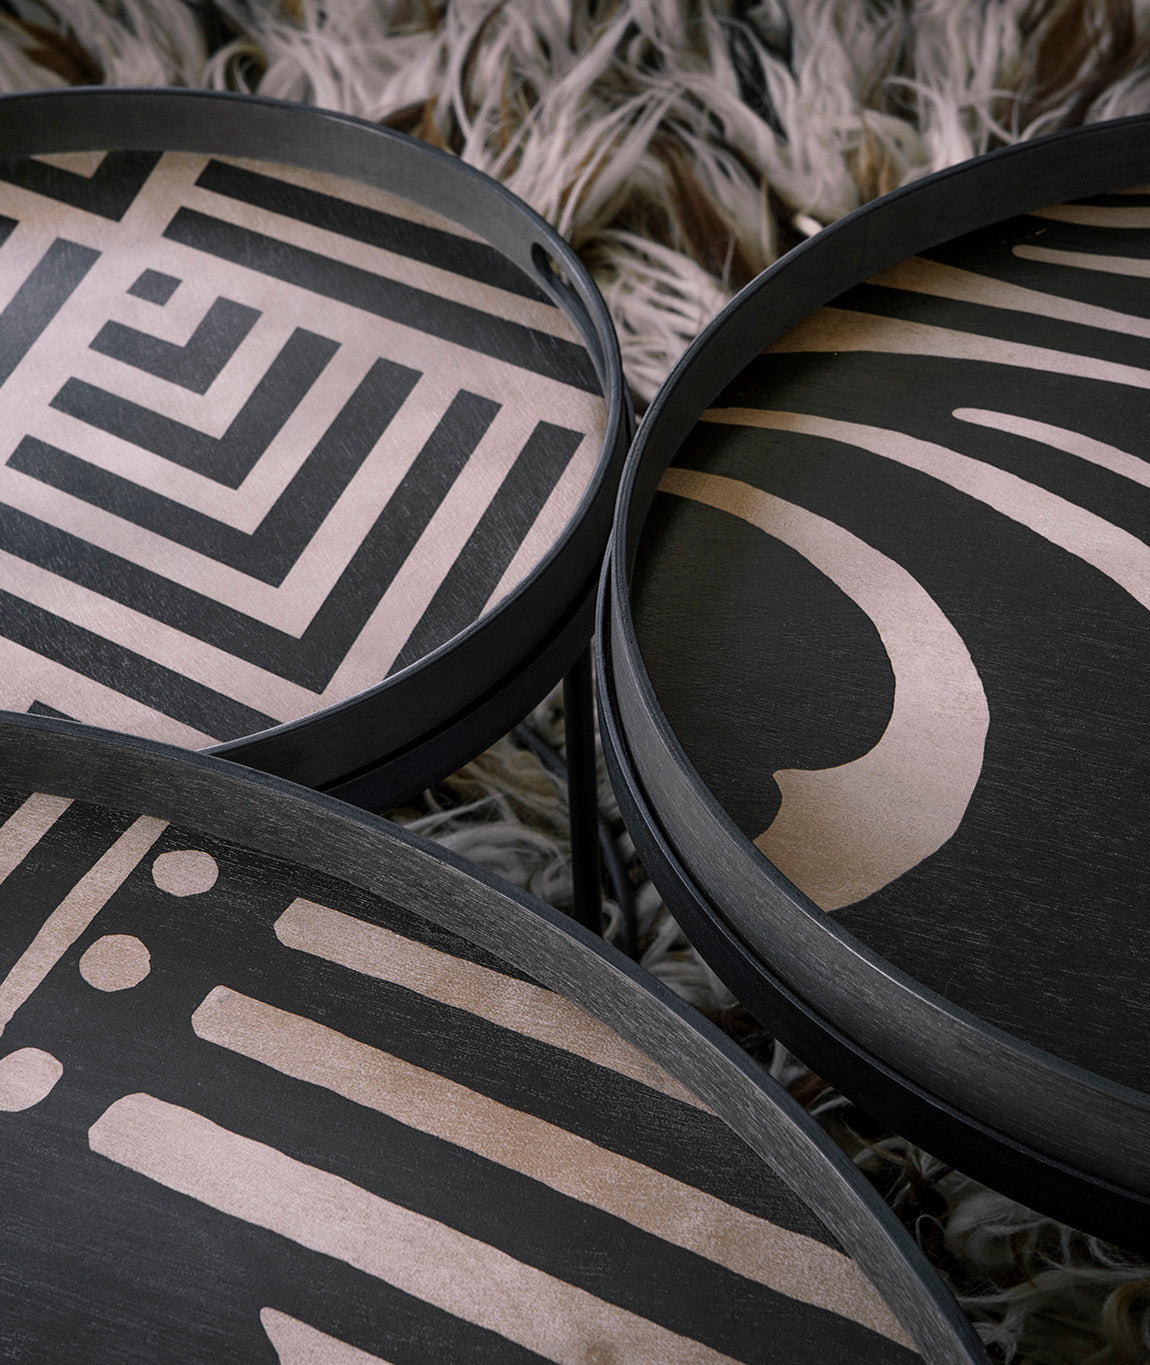 Graphic Wooden Round Tray - 6 Styles Ethnicraft - BEAM // Design Store